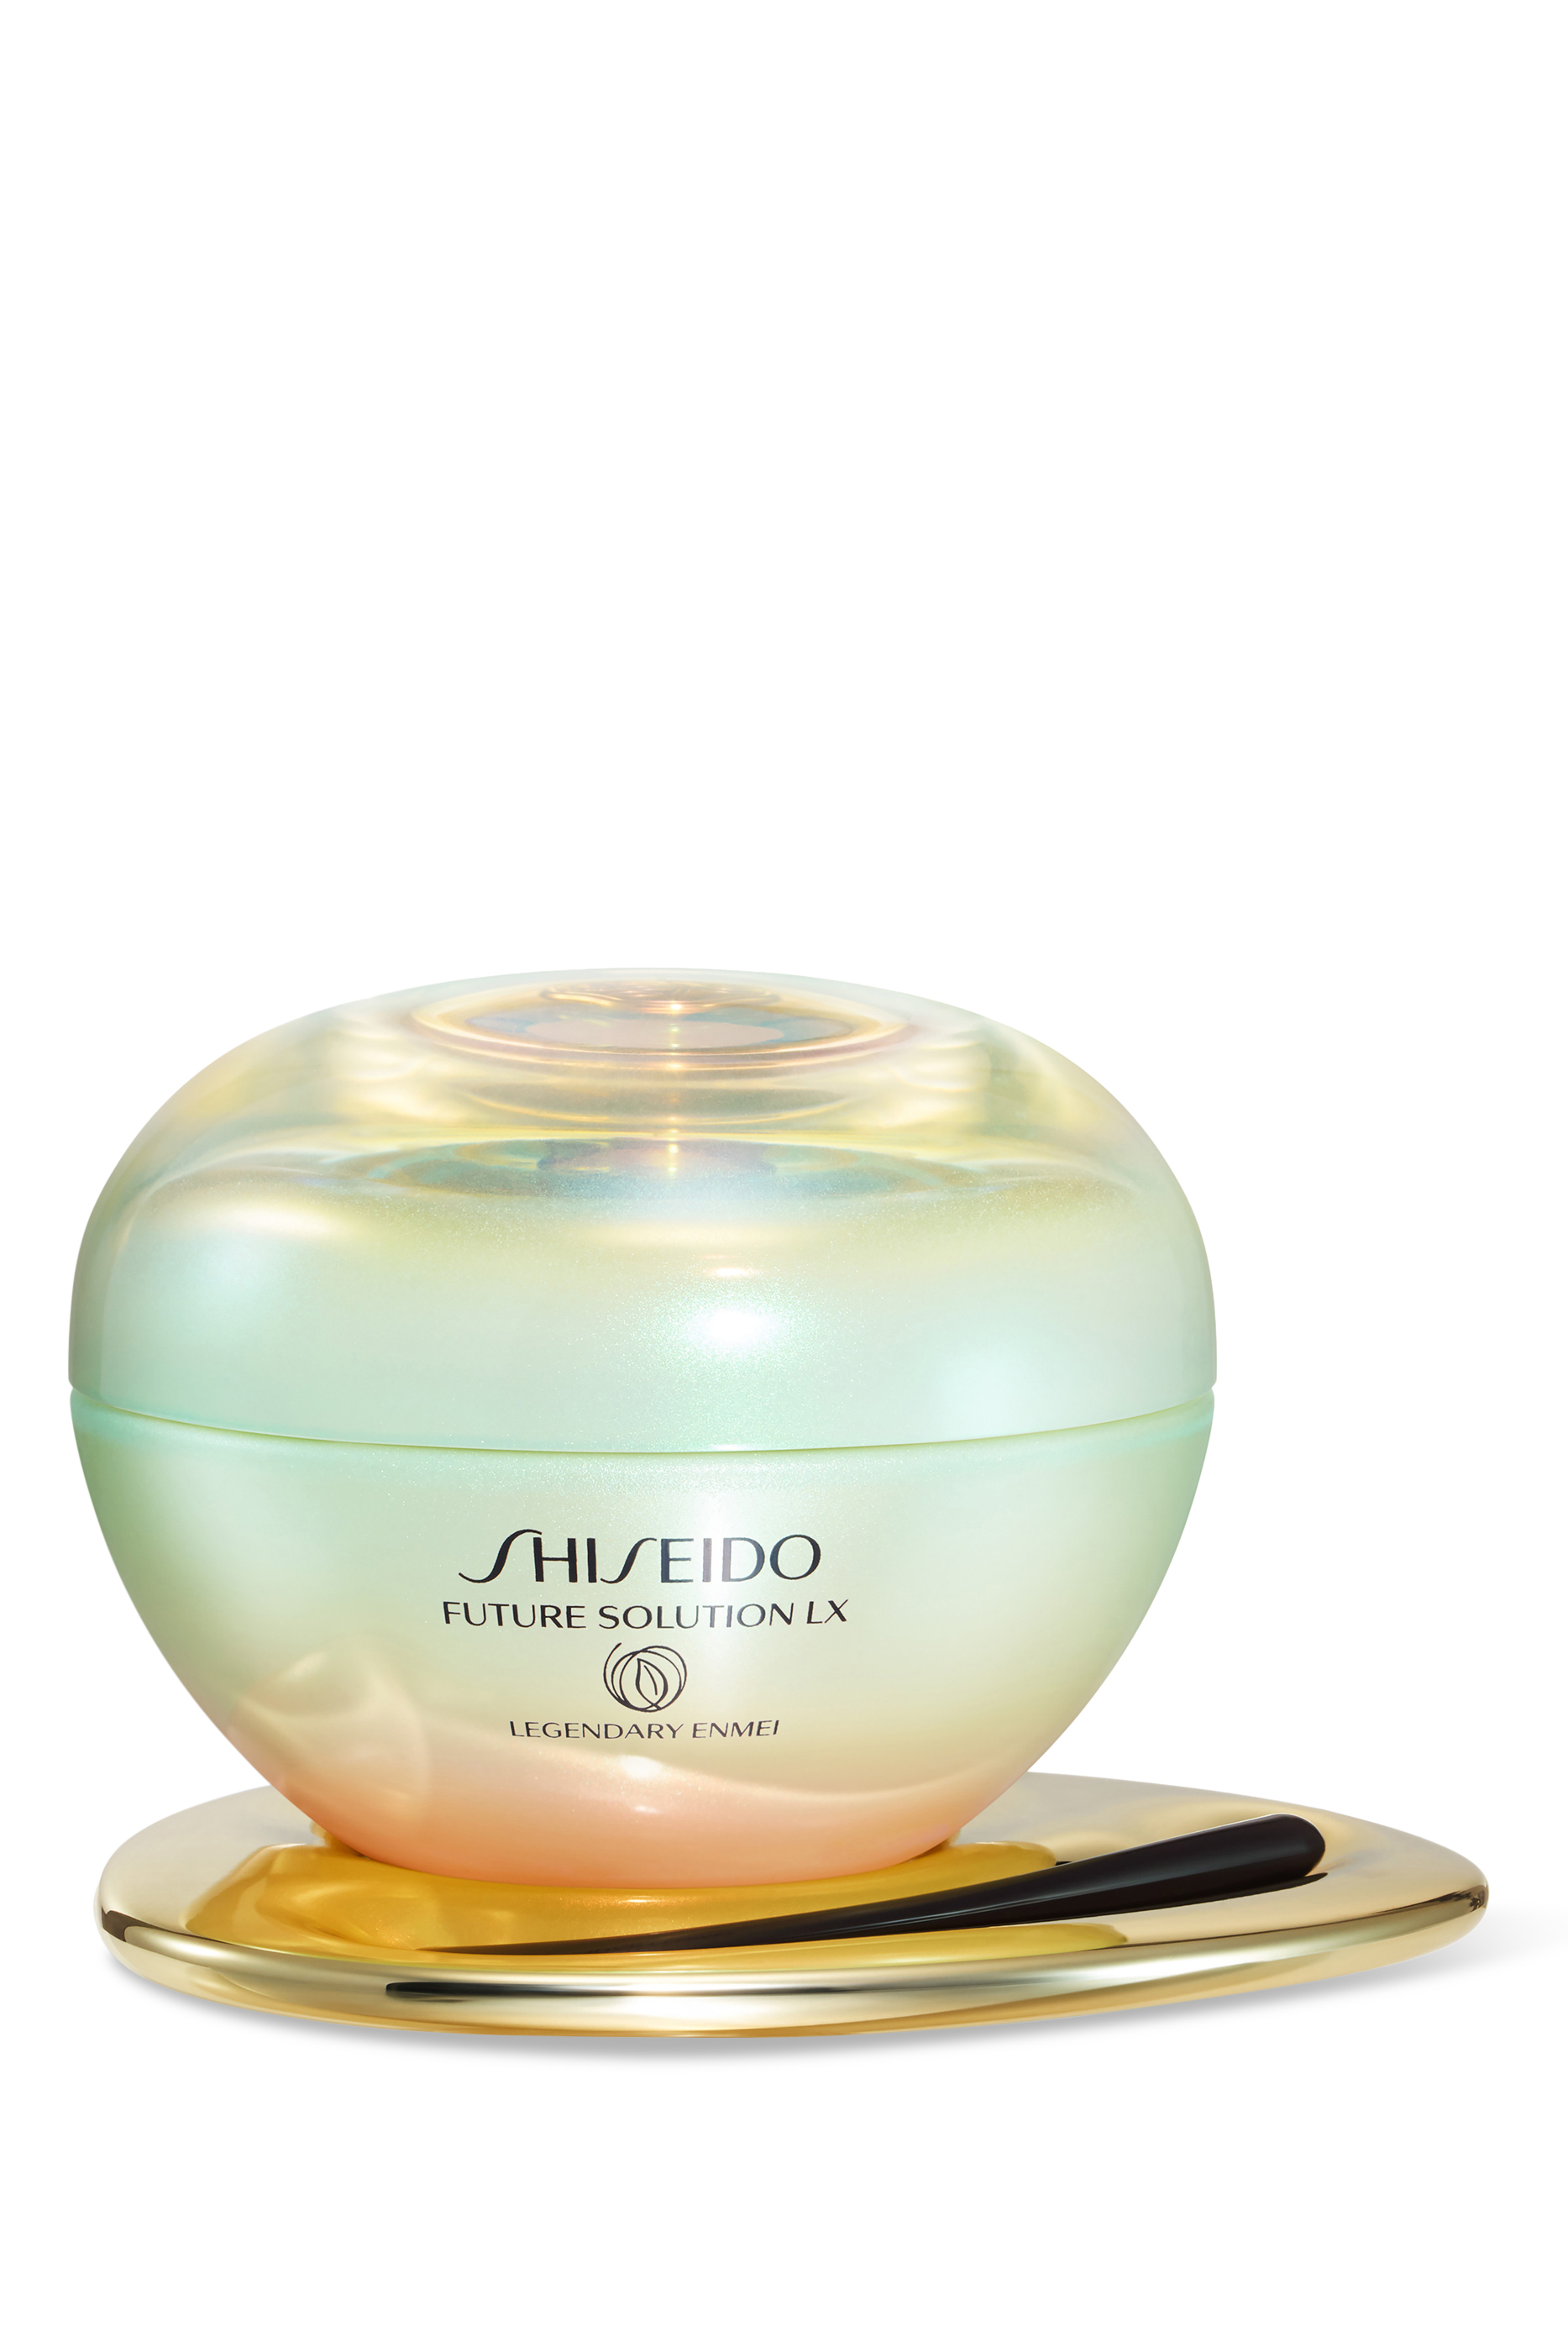 Shiseido solution lx. Shiseido Future solution LX. Крем Shiseido Future solution. "Shiseido Future solution LX E total Radiance Foundation"+"Neutral 2". Future solution Legendary Enmei.